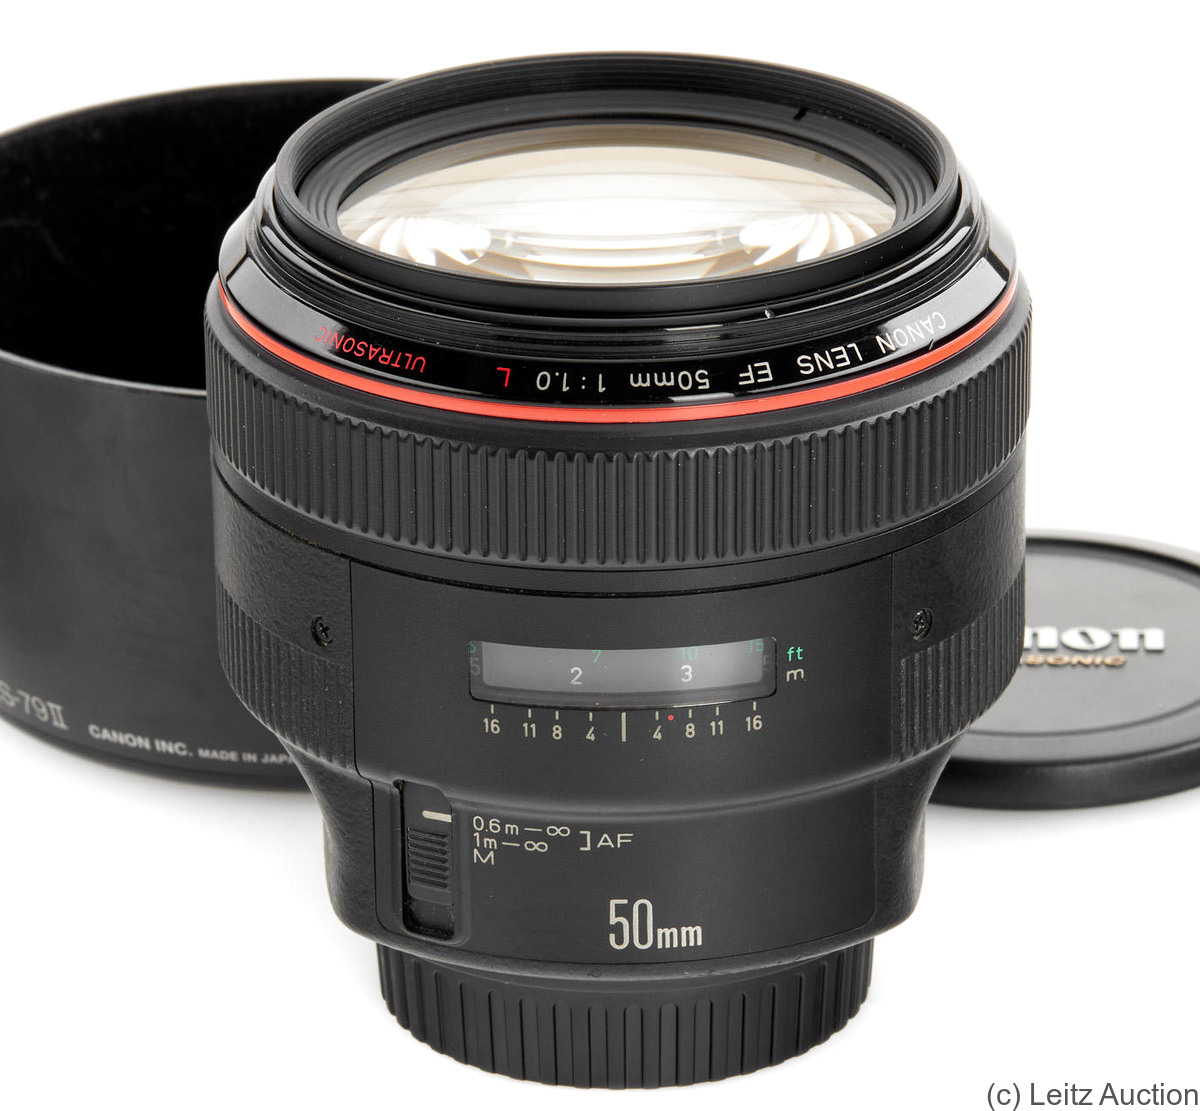 Canon: 50mm (5cm) f1.0 EF L USM camera